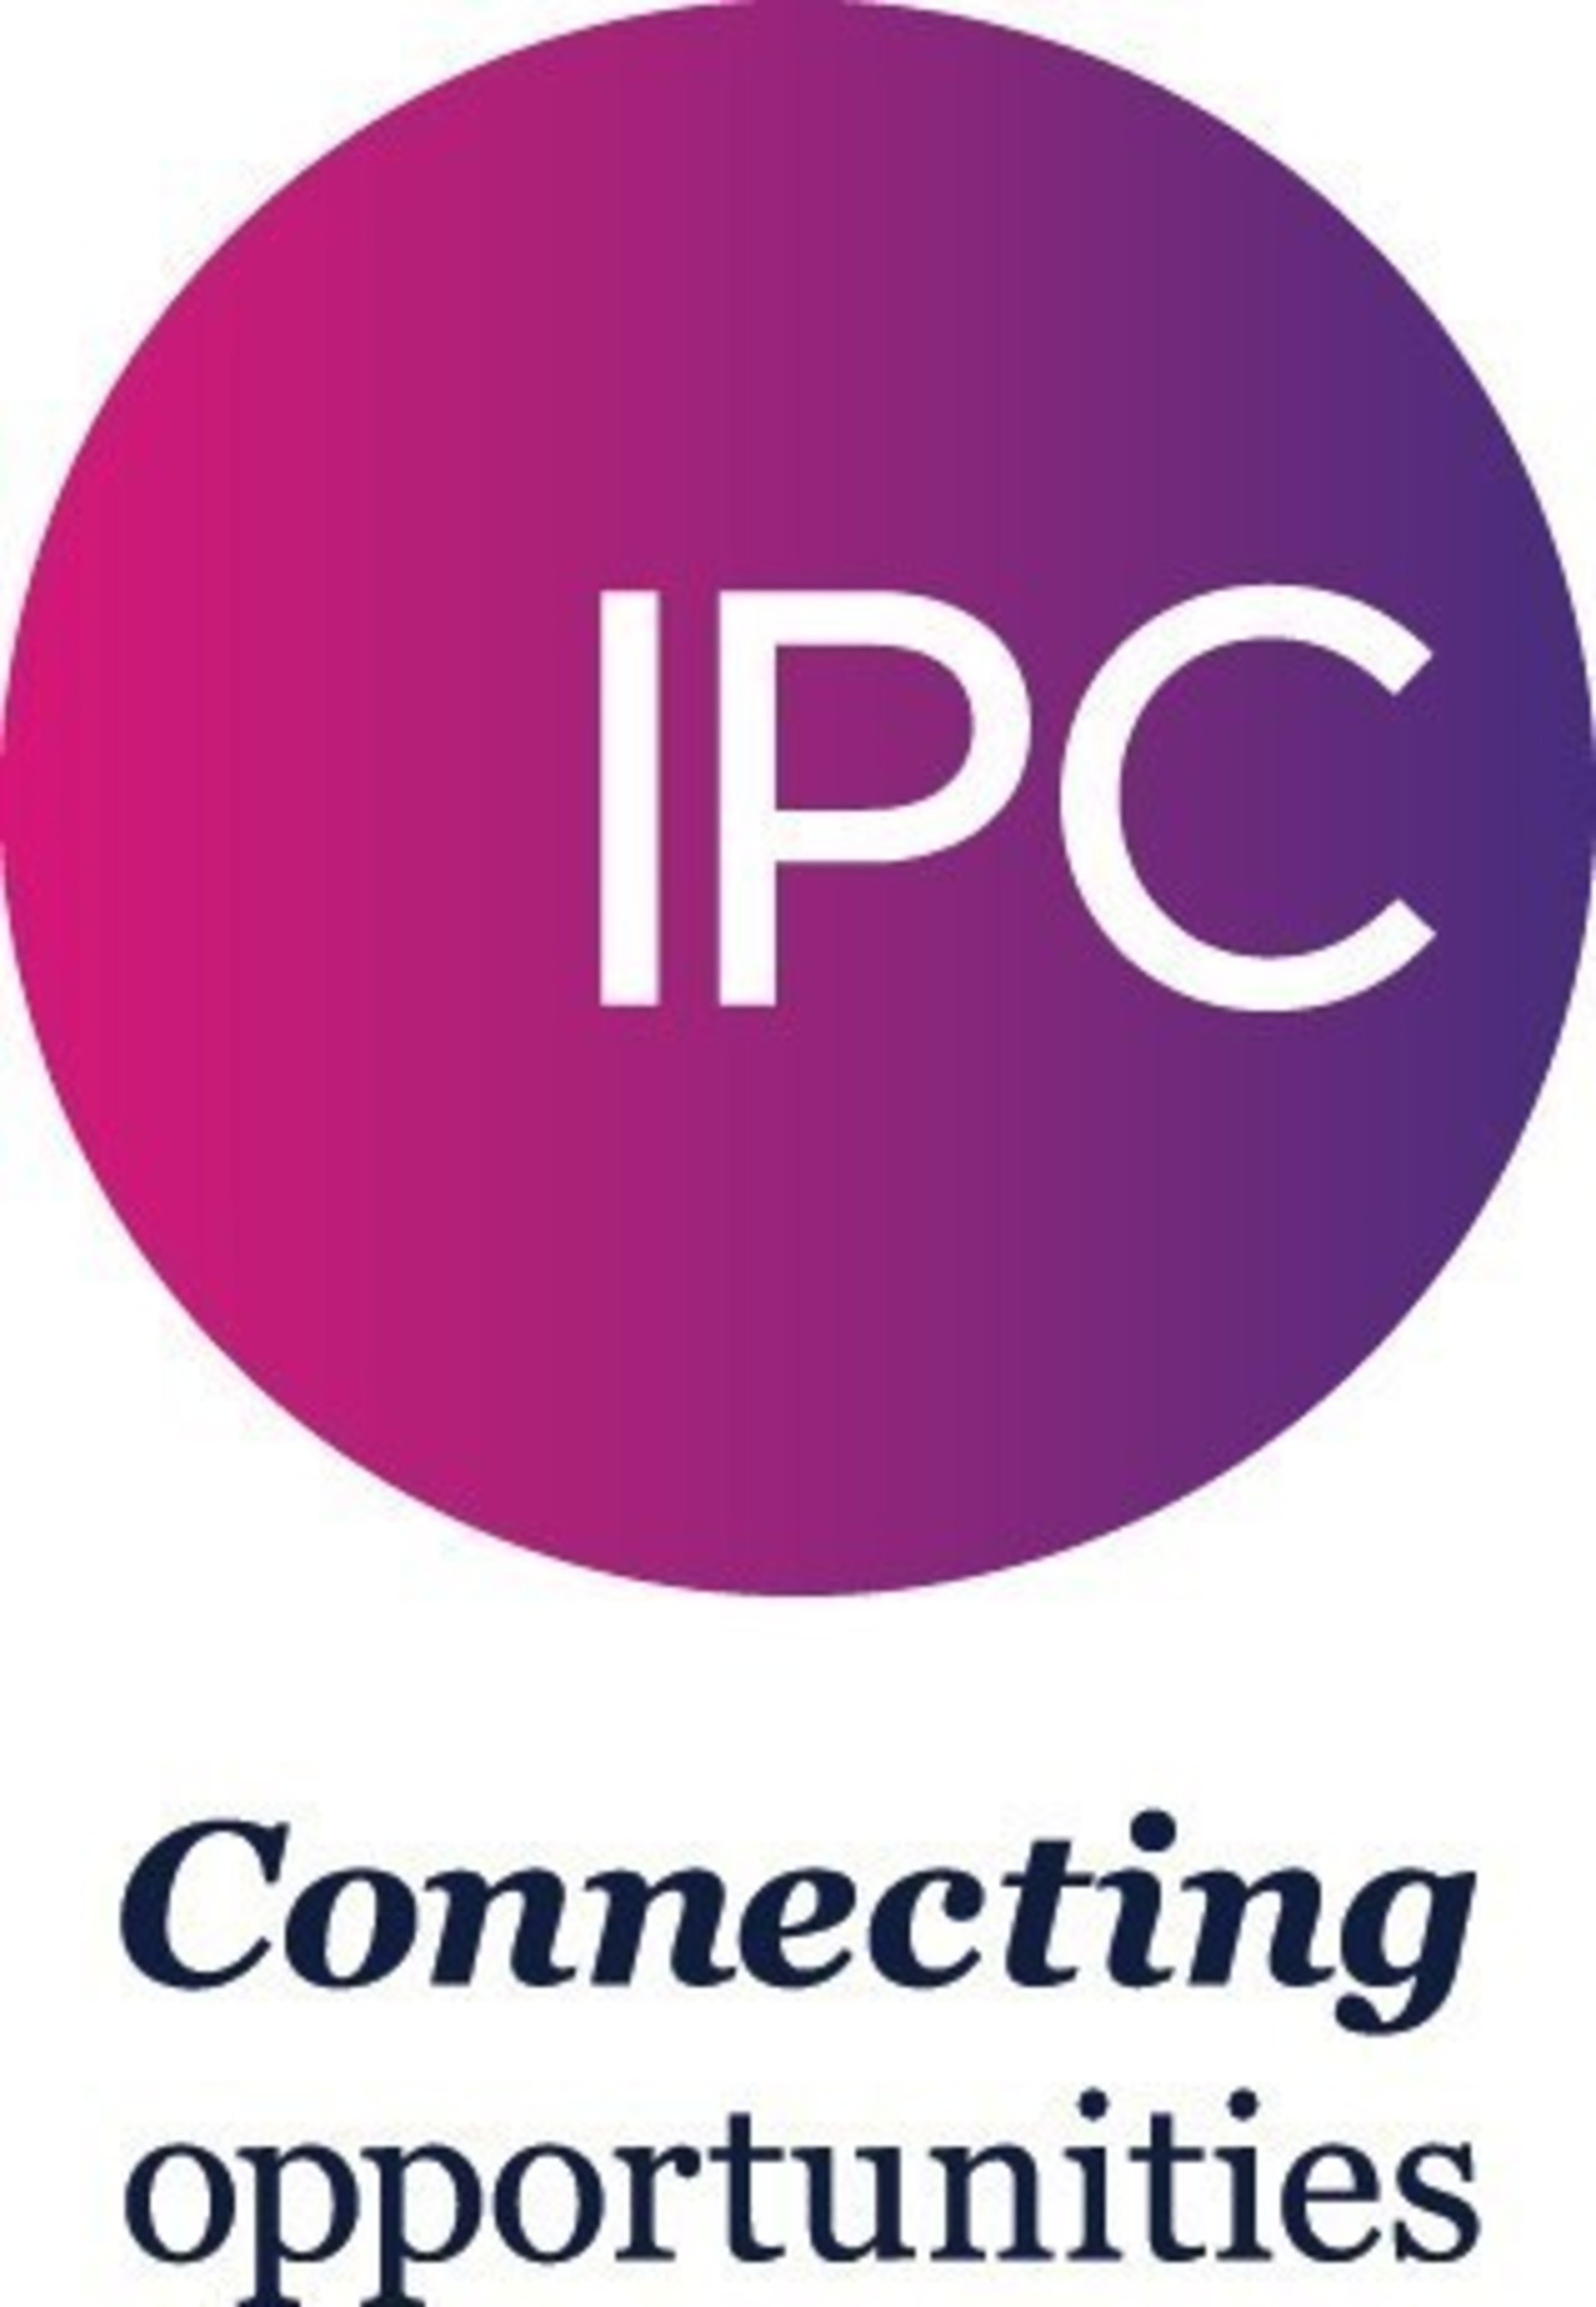 IPC's new logo